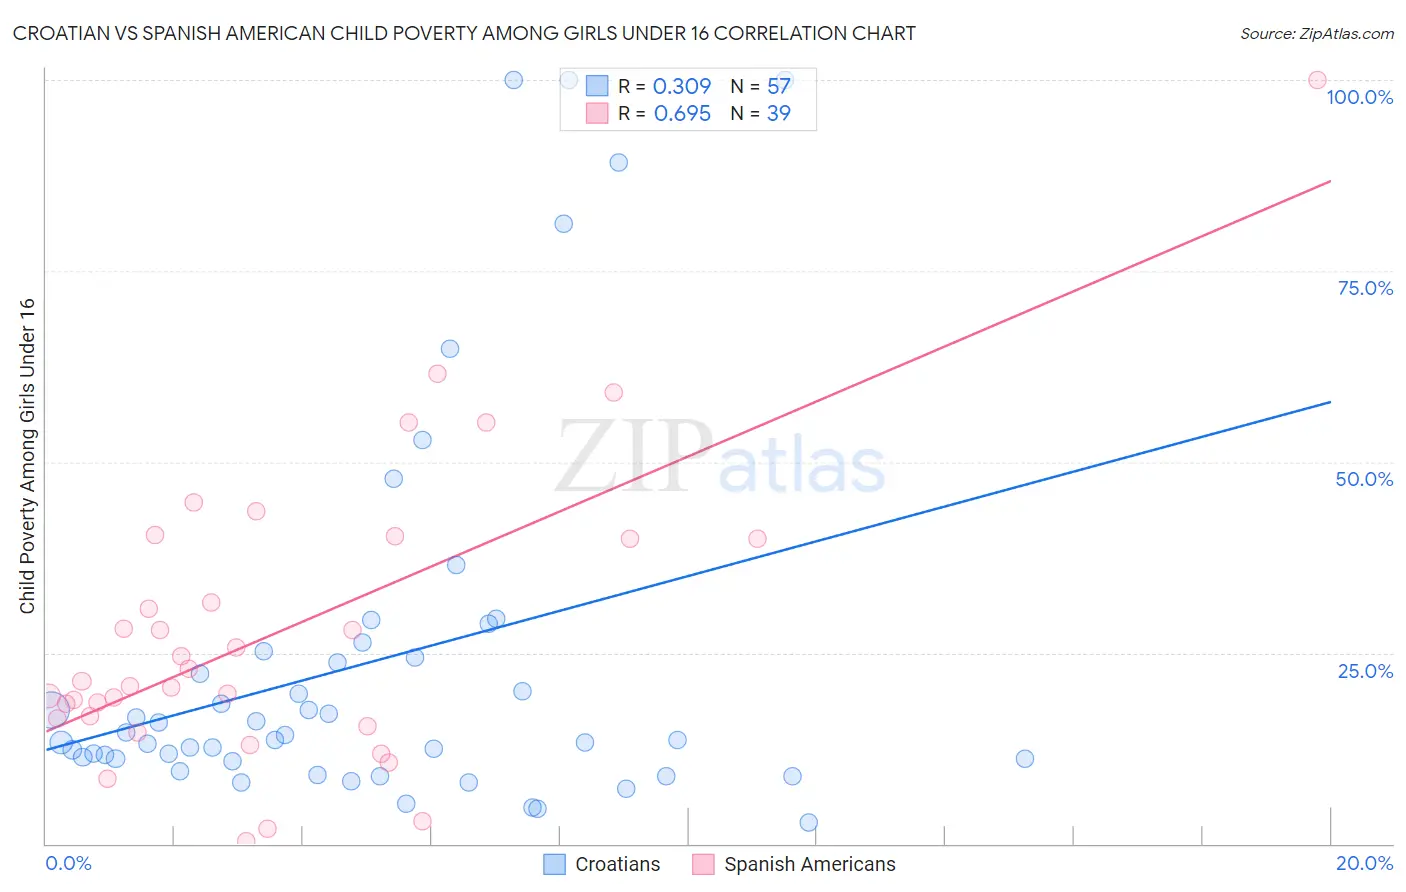 Croatian vs Spanish American Child Poverty Among Girls Under 16